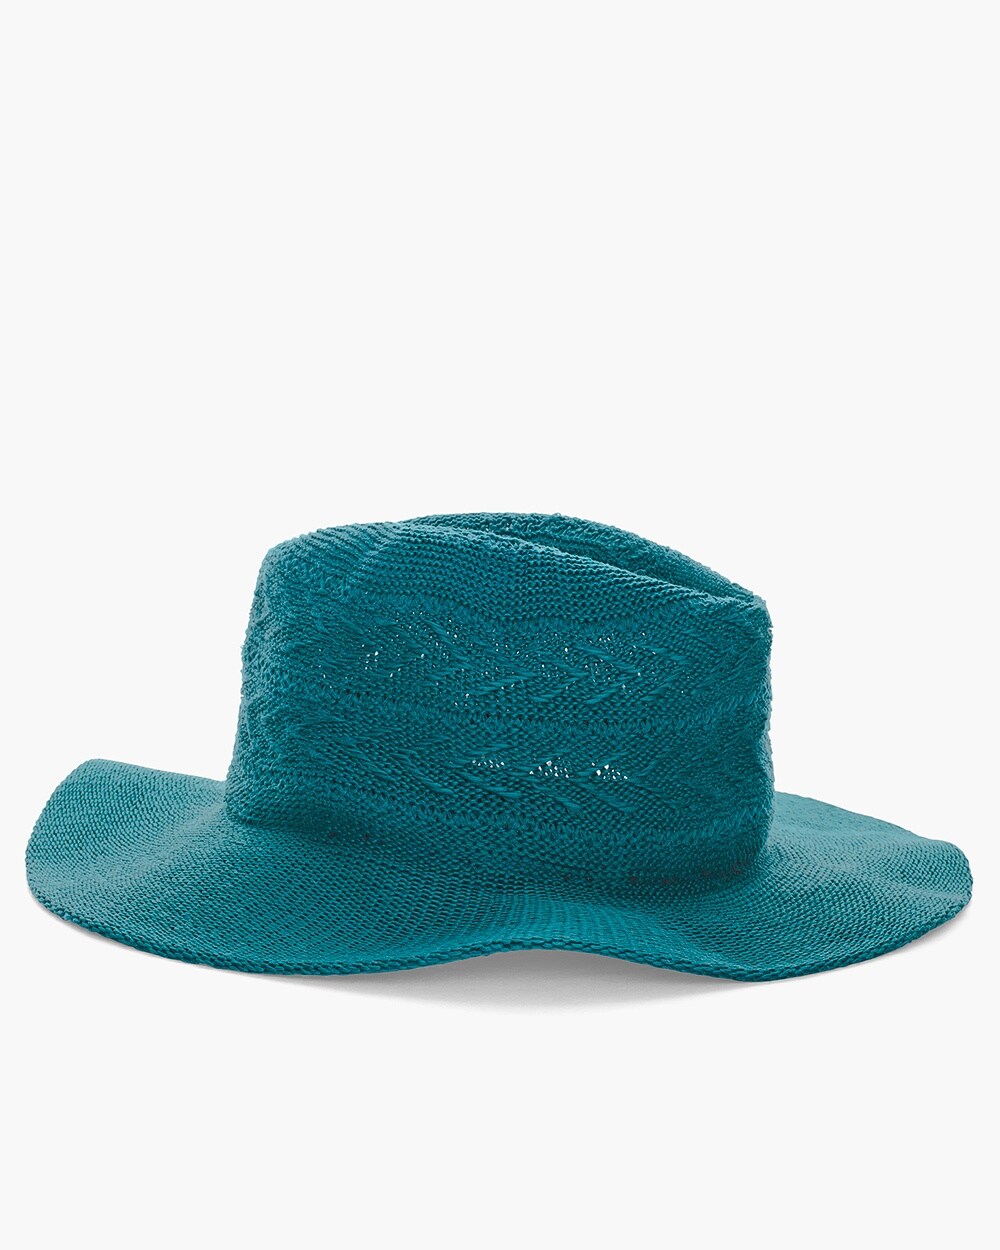 Teal Knit Hat